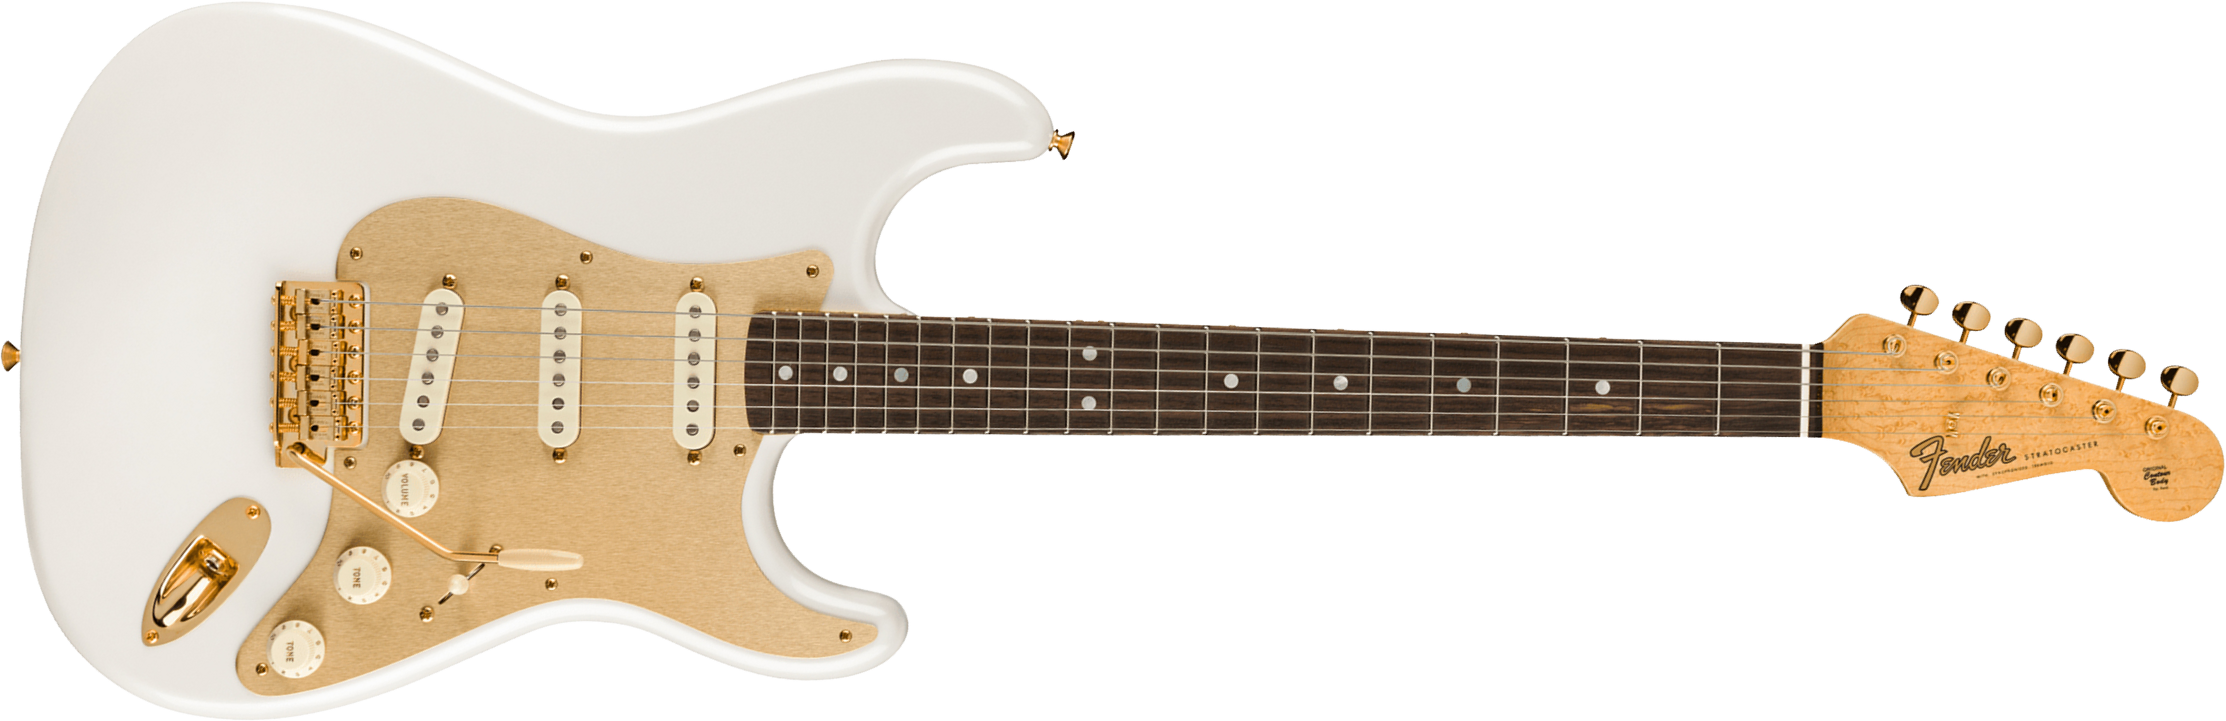 Fender Custom Shop Strat 75th Anniversary Ltd Rw - Nos Diamond White Pearl - Str shape electric guitar - Main picture